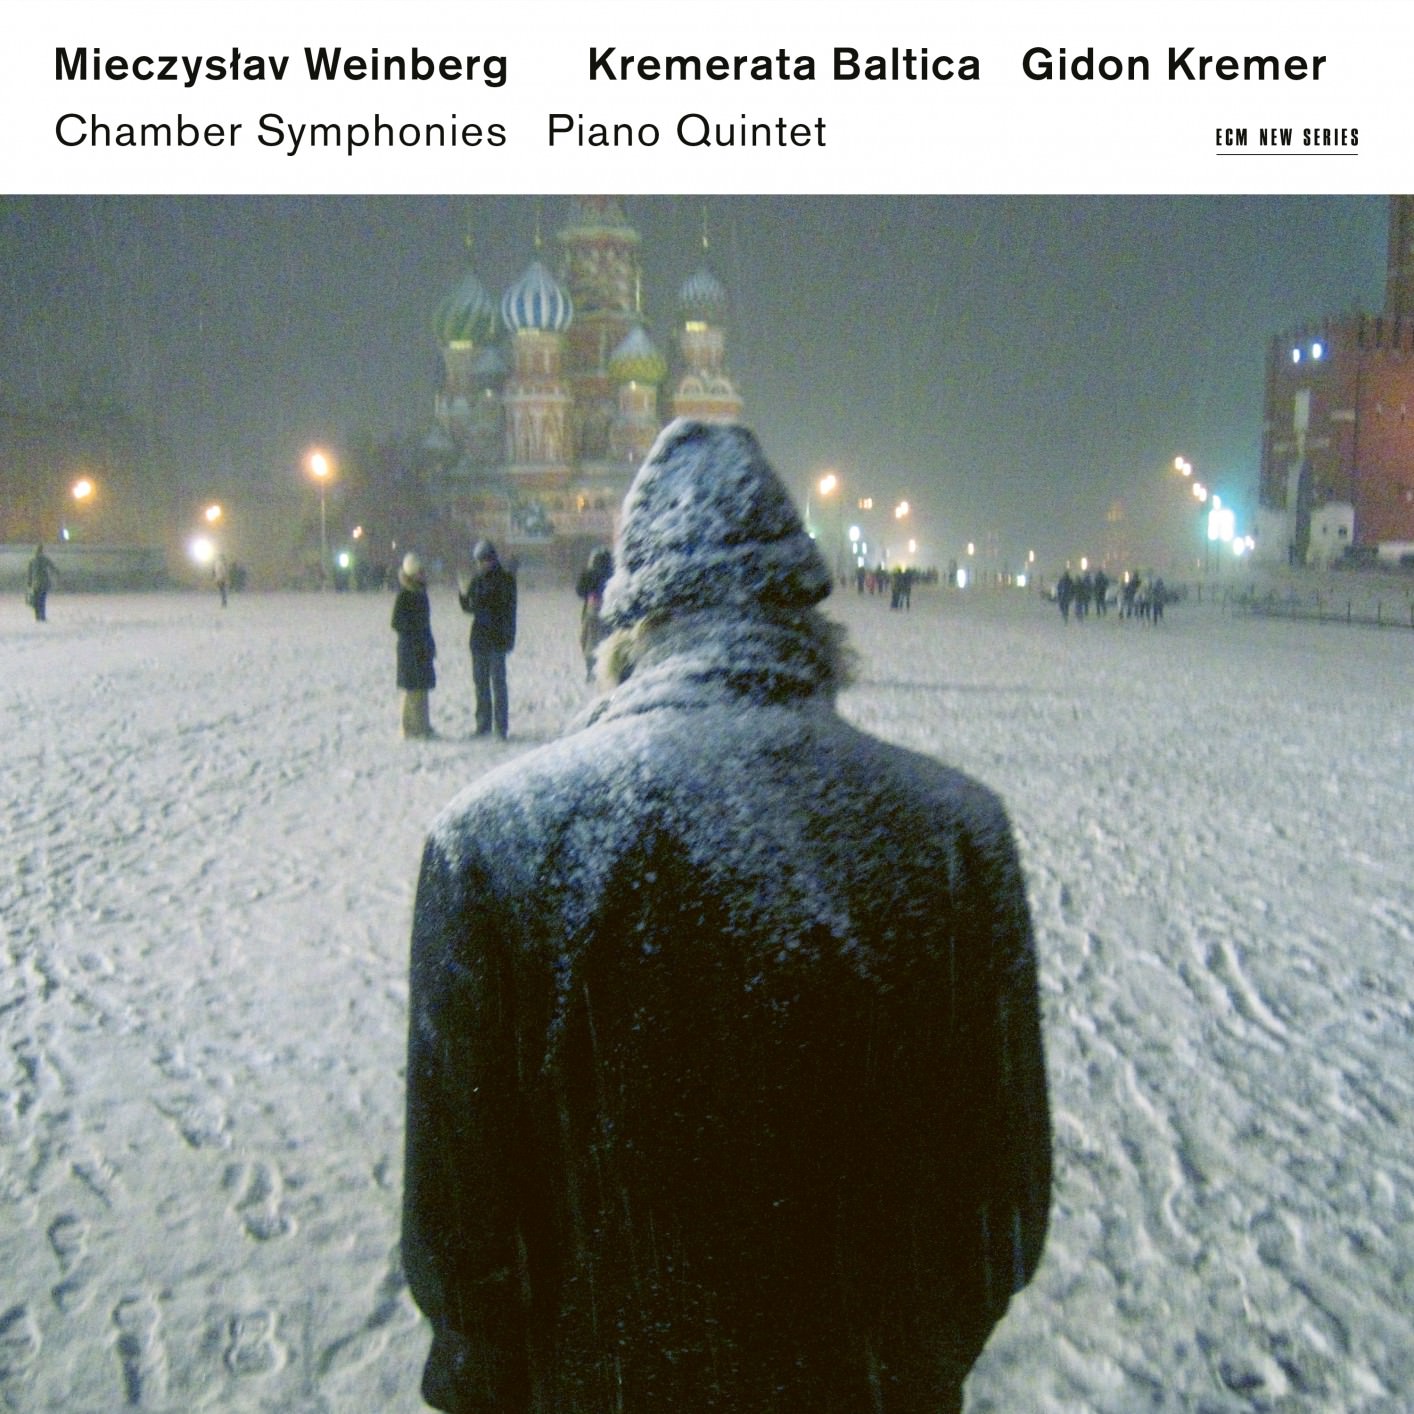 Kremerata Baltica & Gidon Kremer – Mieczysław Weinberg: Chamber Symphonies, Piano Quintet (2017) [Official Digital Download 24bit/96kHz]